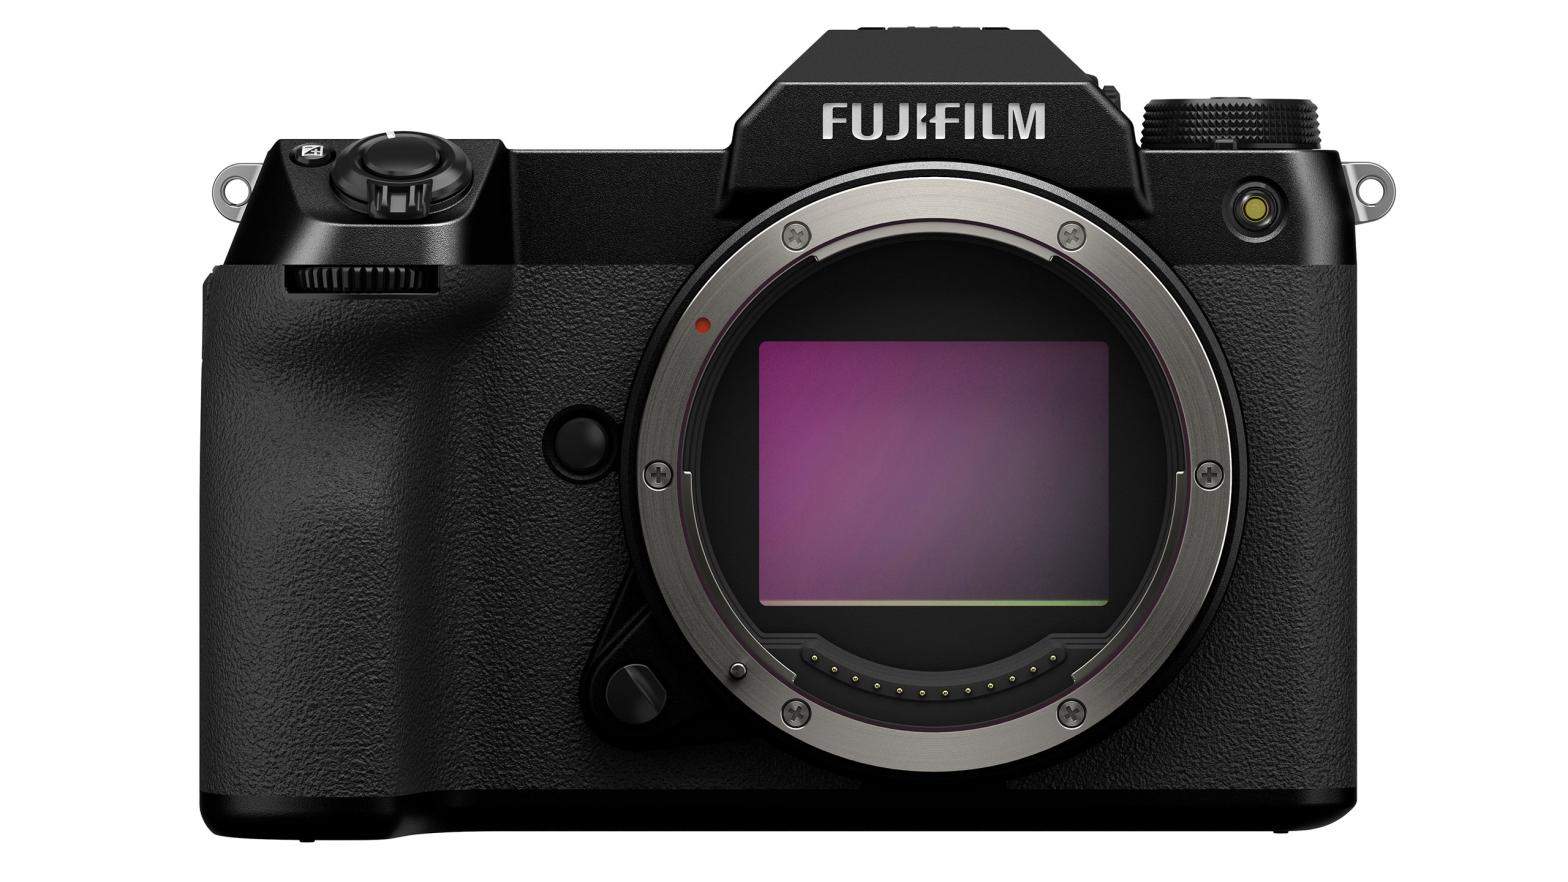 Image: Fujifilm